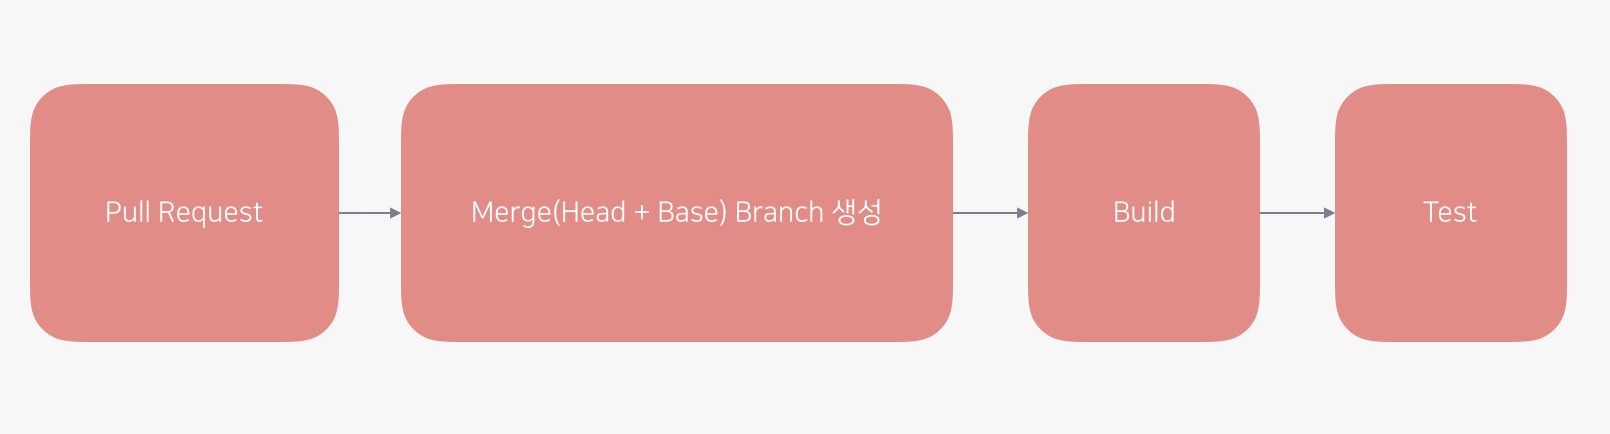 Pull Request -> Merge Branch 생성 -> Build -> Test 파이프라인을 표현하는 그림